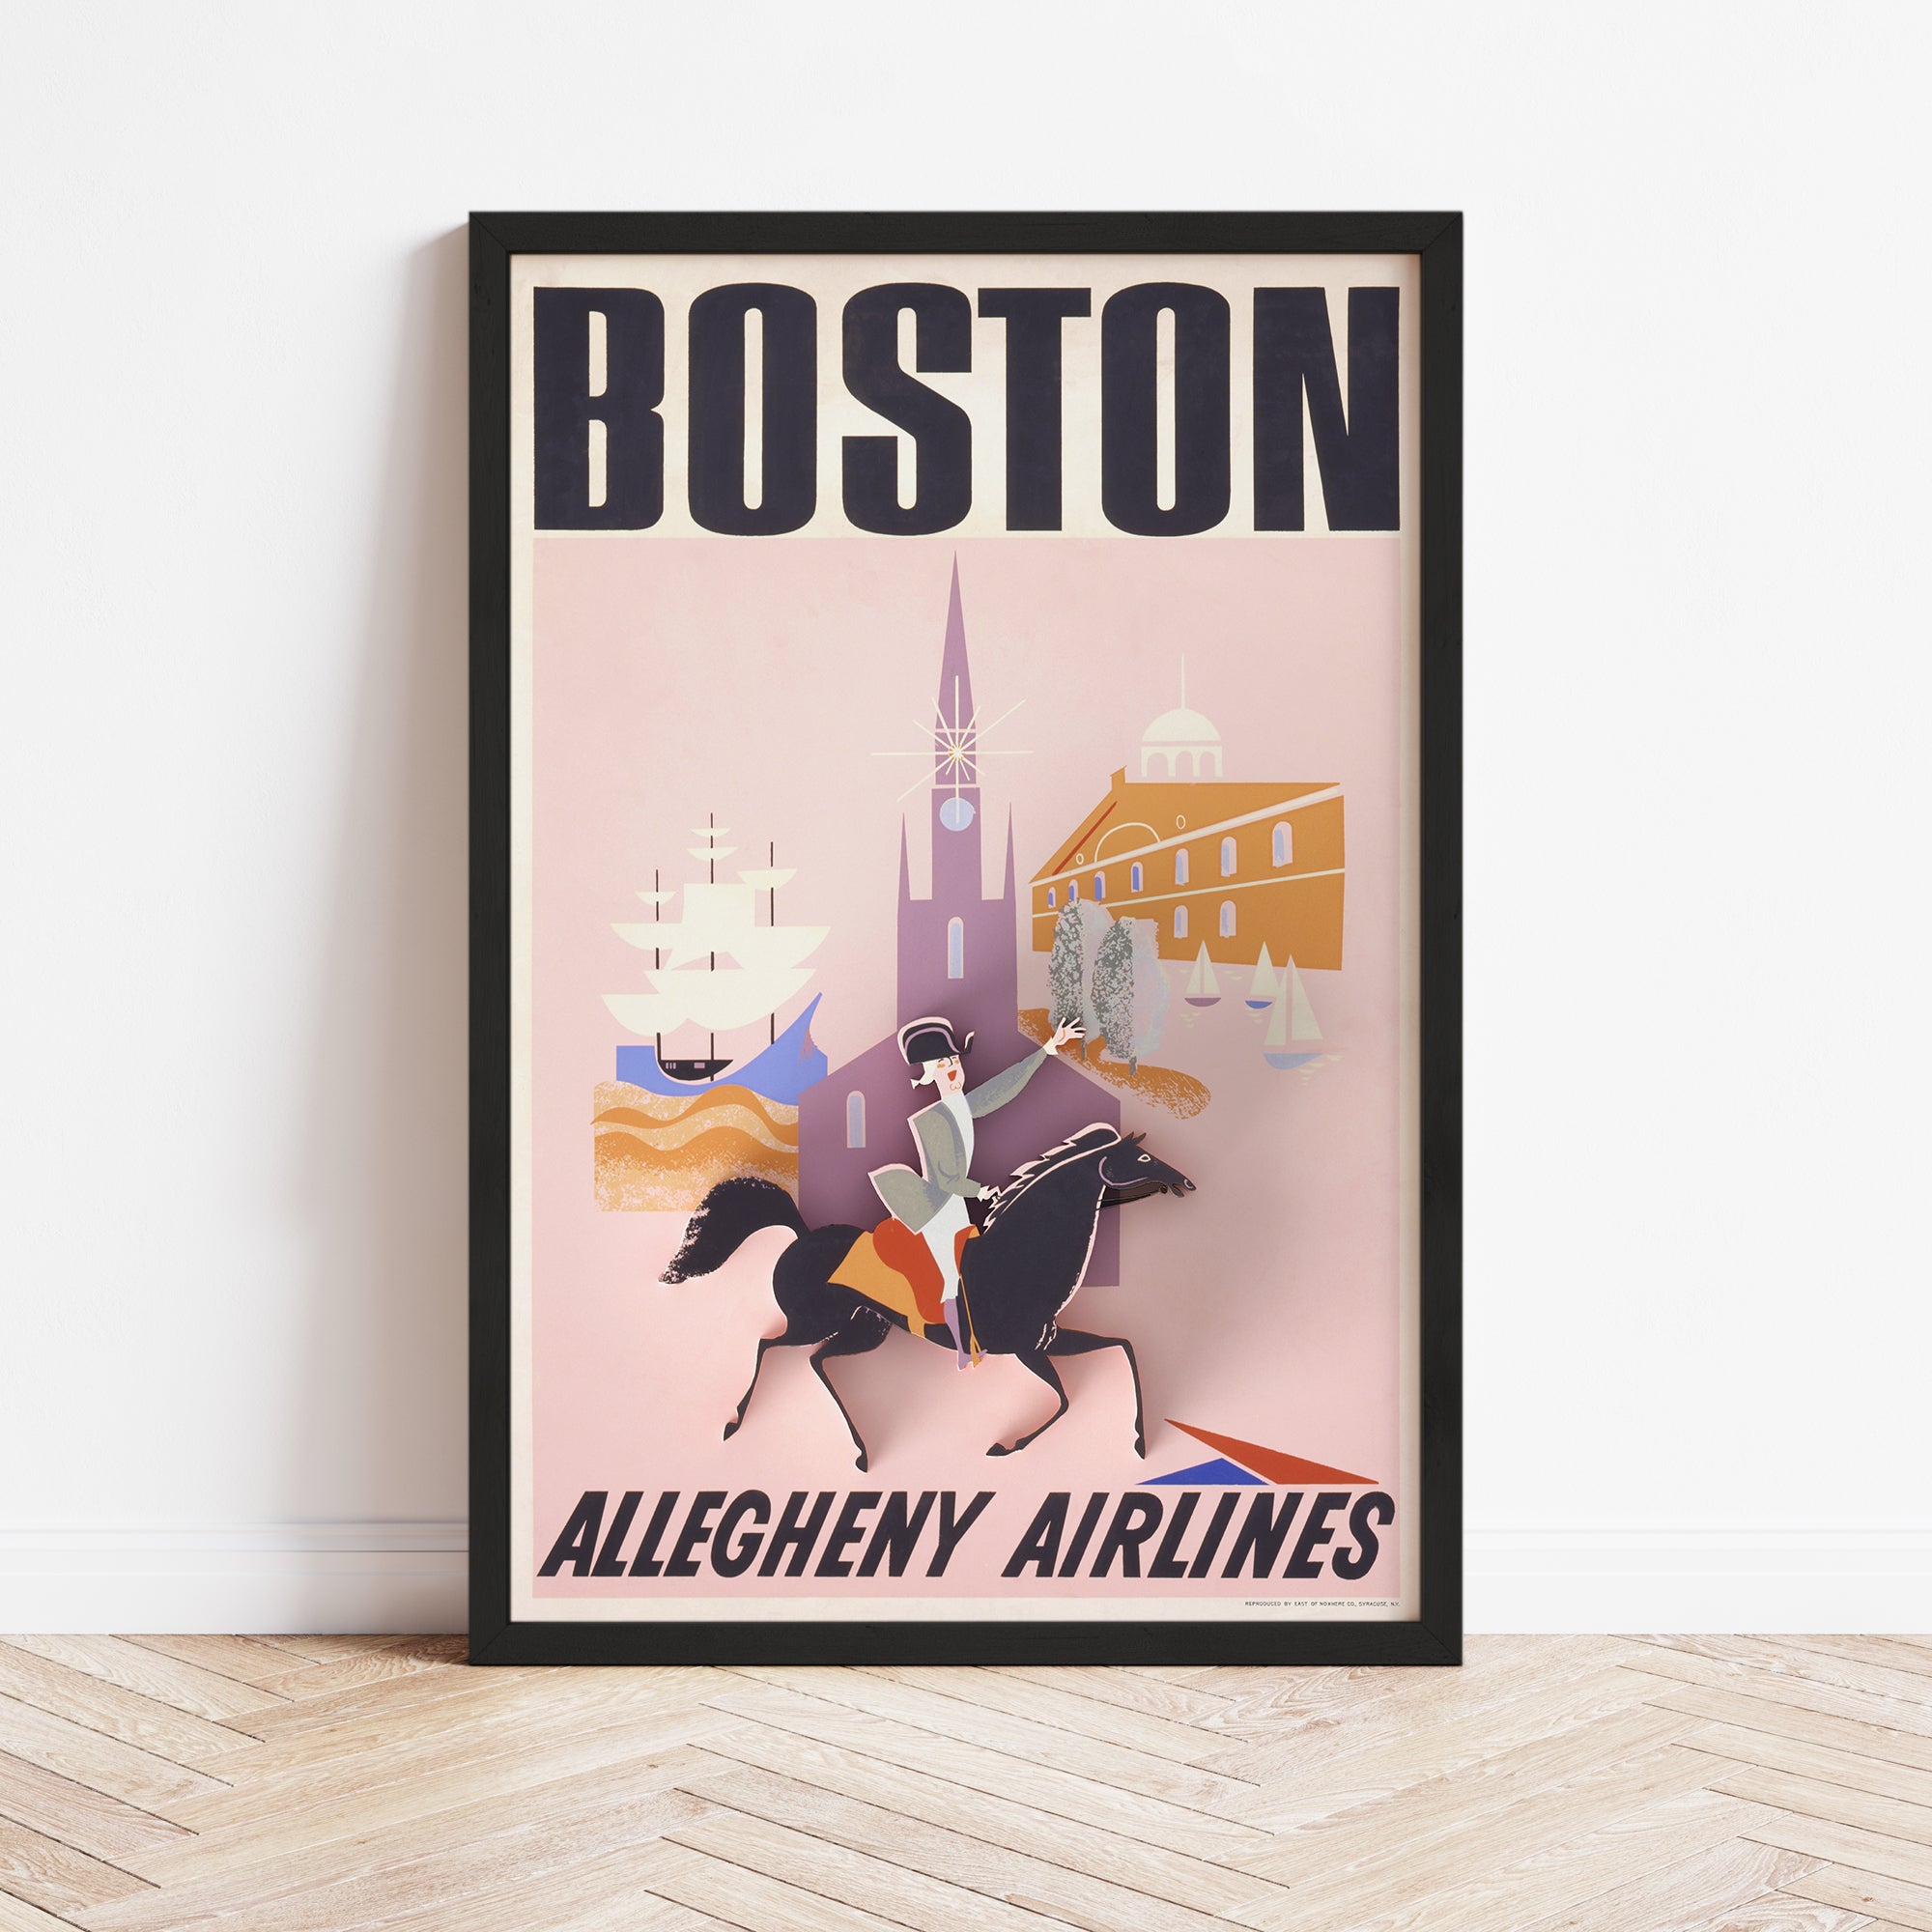 Allegheny Airlines Boston (1950) - Retro Art Print